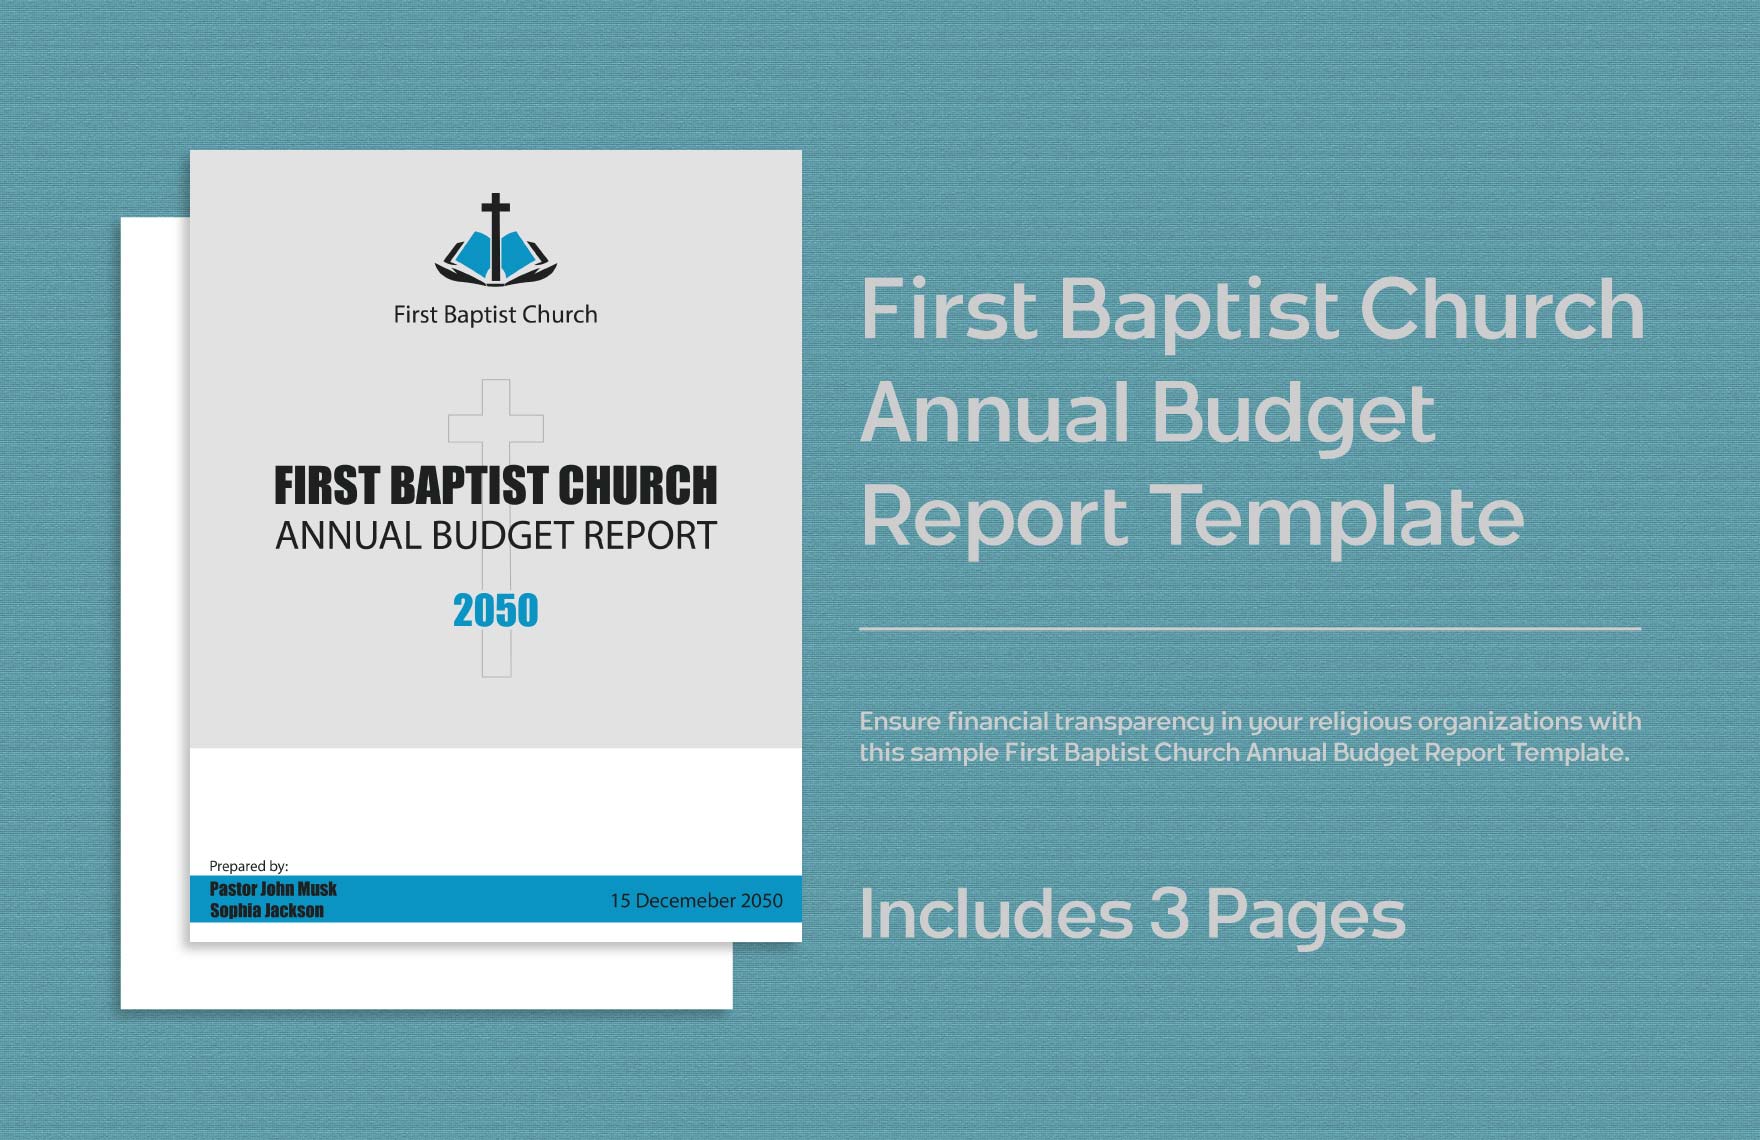 First Baptist Church Annual Budget Report Template